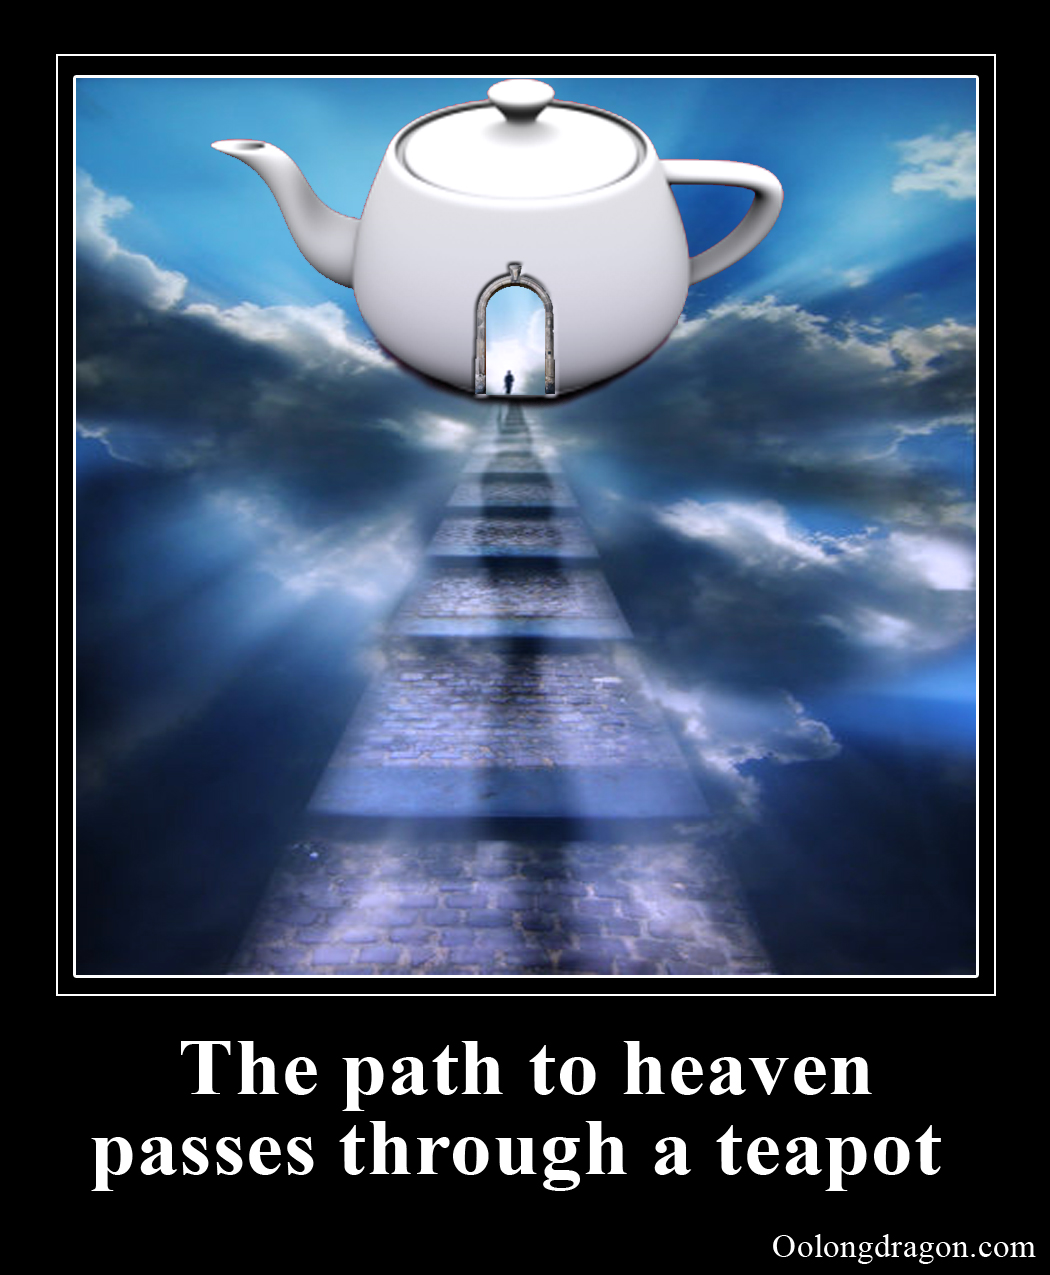 The path throught heaven passes throught a teapot